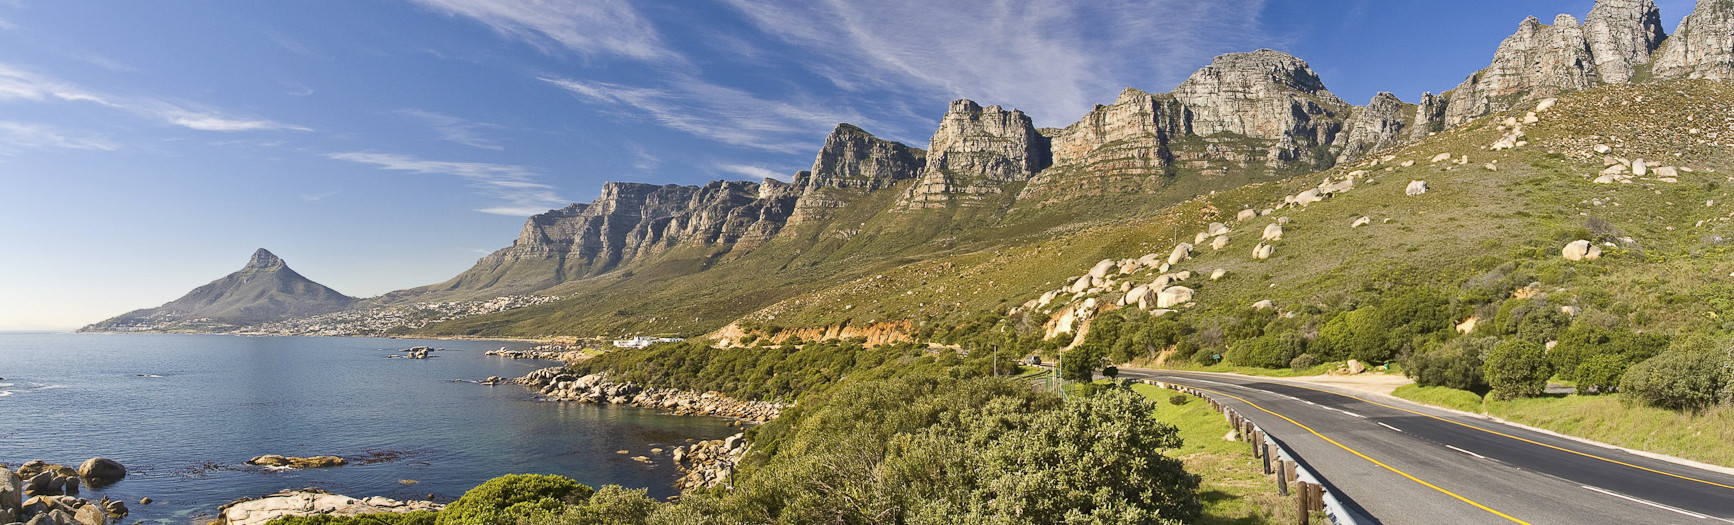 Sudafrica - Cape Town e Garden Route